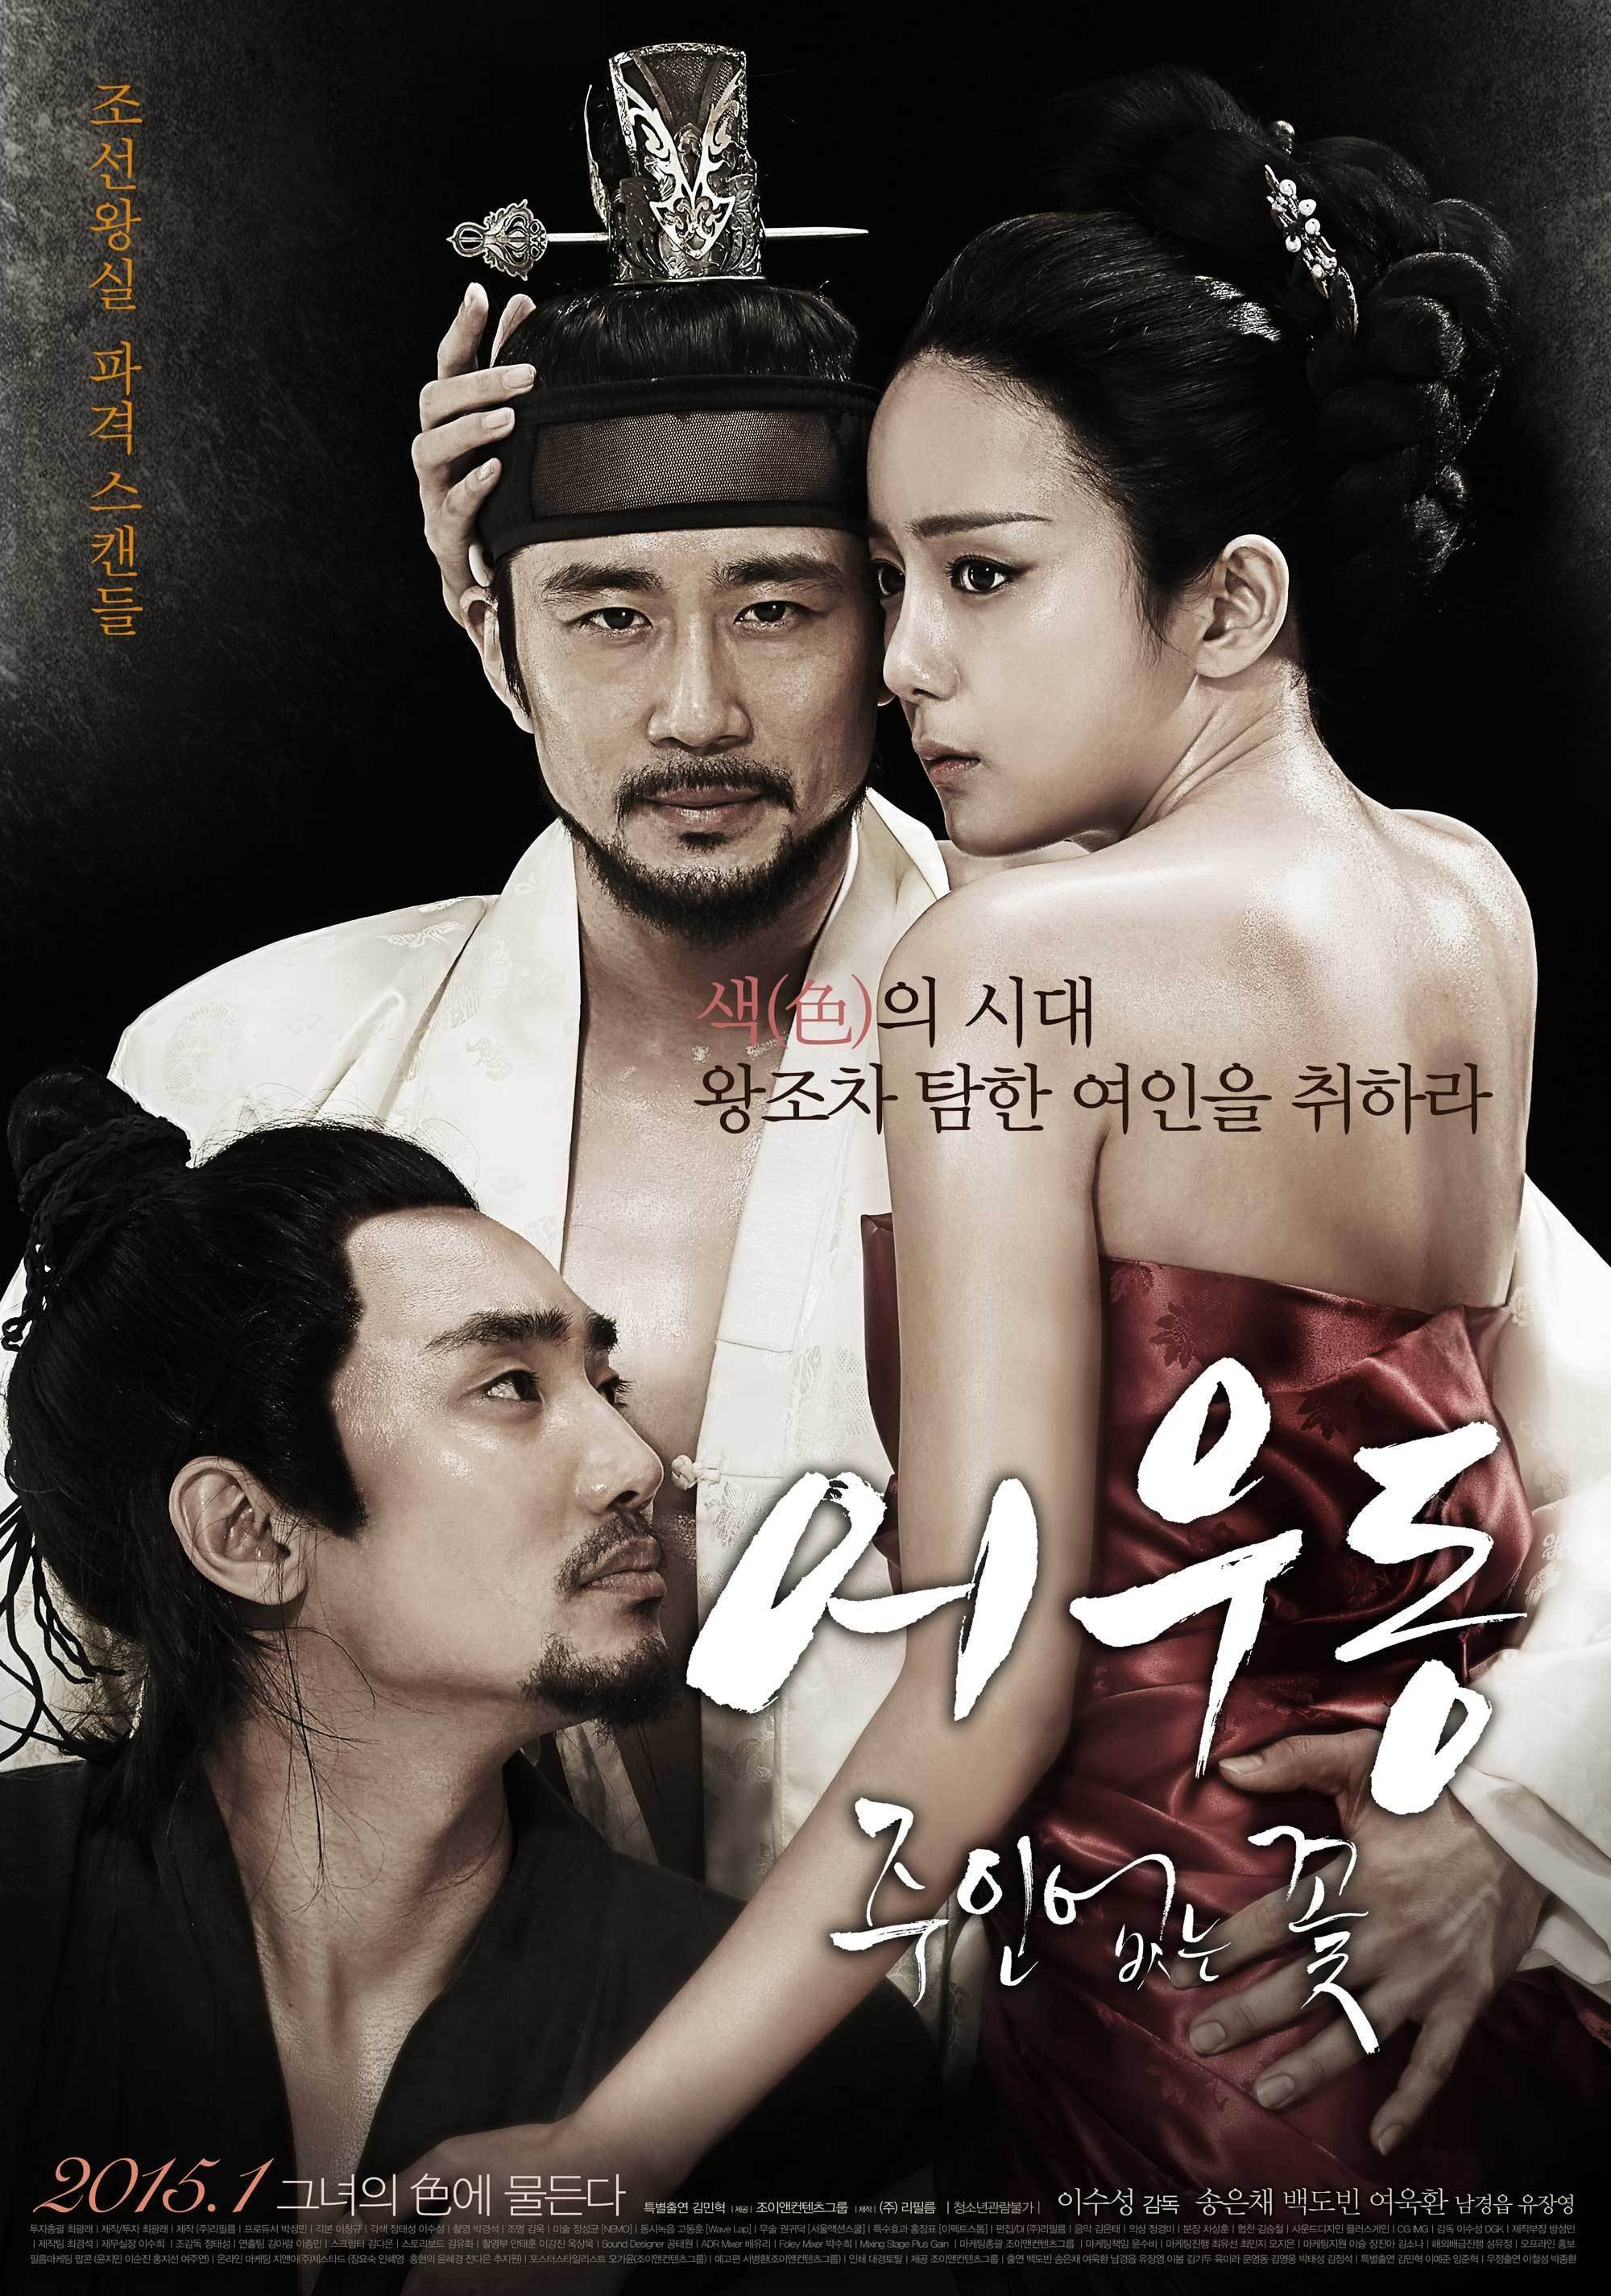  Korean  movies  opening today 2022 01 29 in Korea  